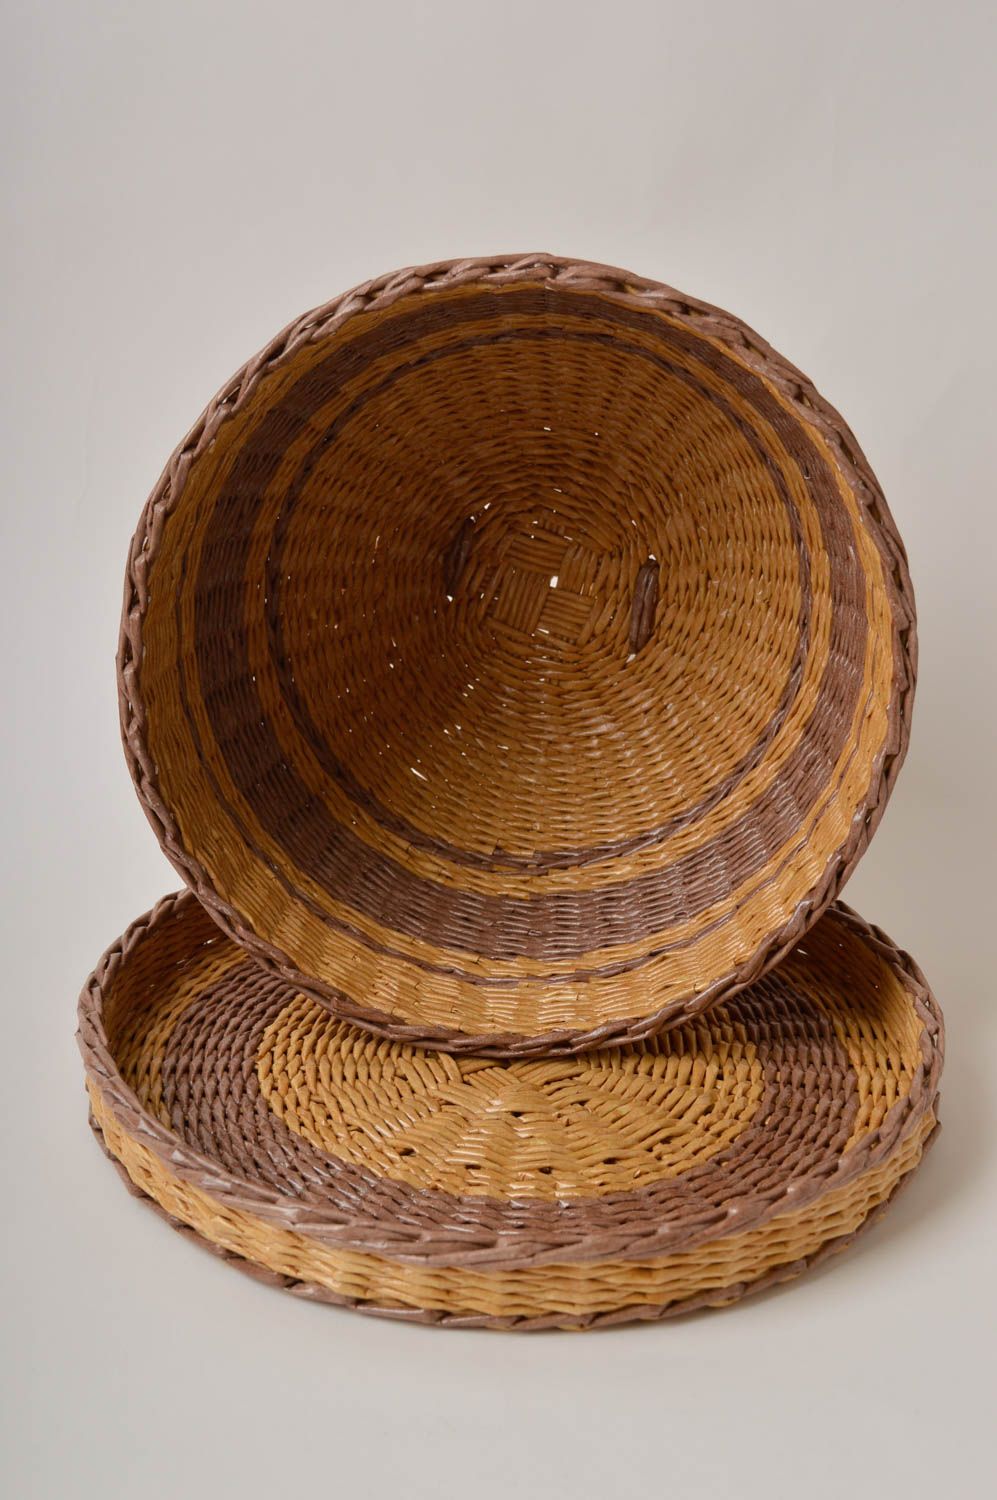 Handmade kitchen basket for bread wicker basket for kitchen home decor ideas photo 4